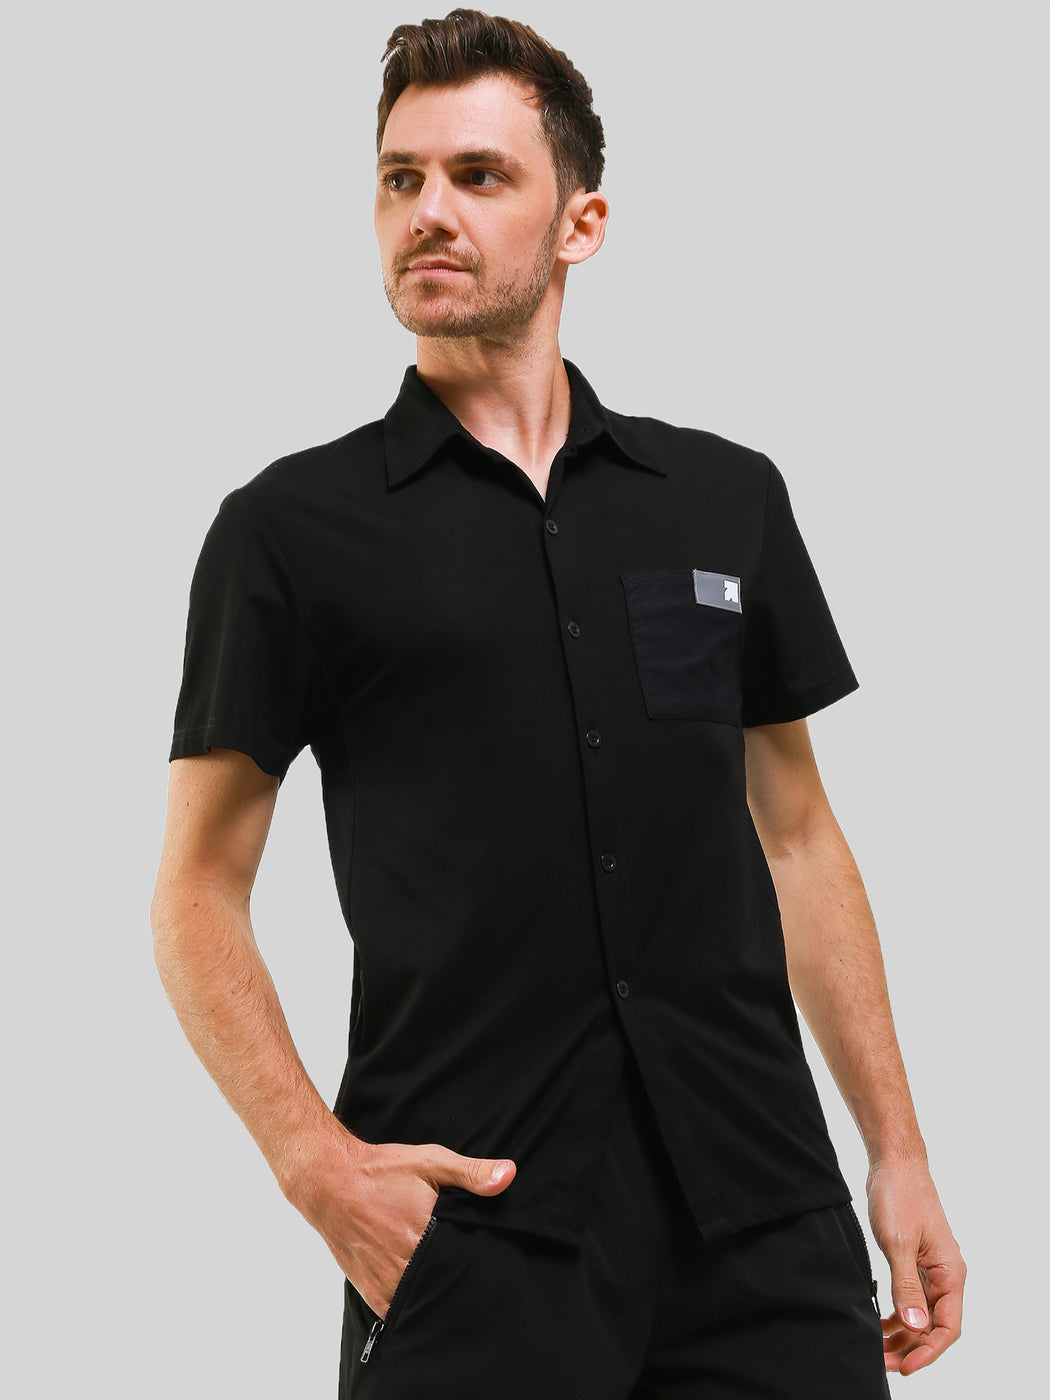 Unisex Ultimate Utilitarian Shirt Male Black